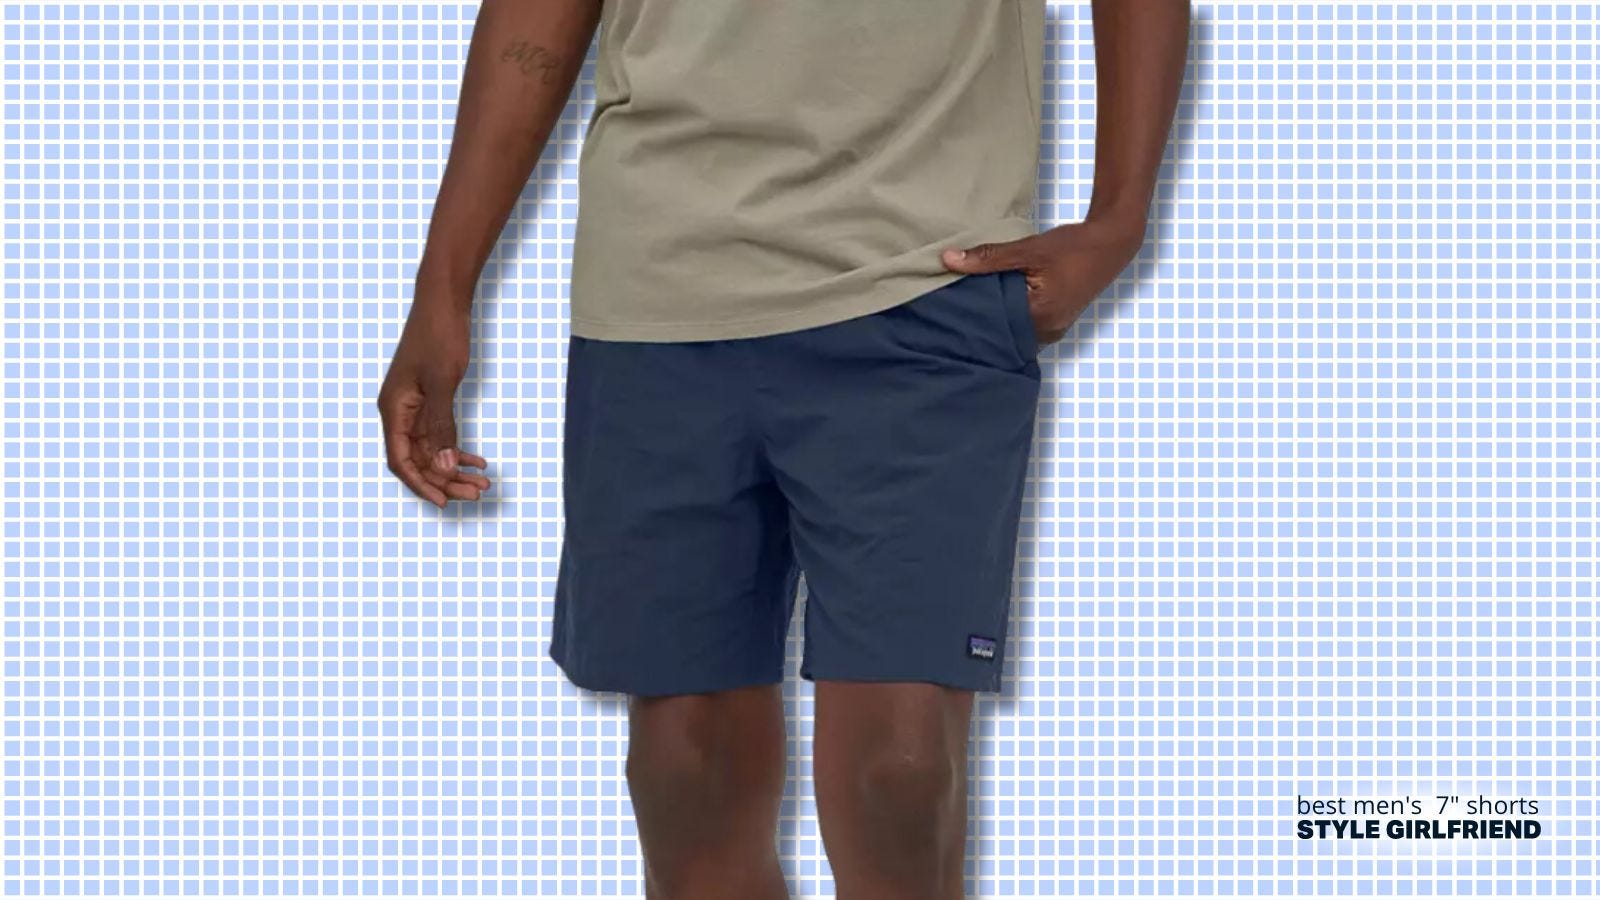 torso of man wearing a grey t-shirt and navy performance shorts